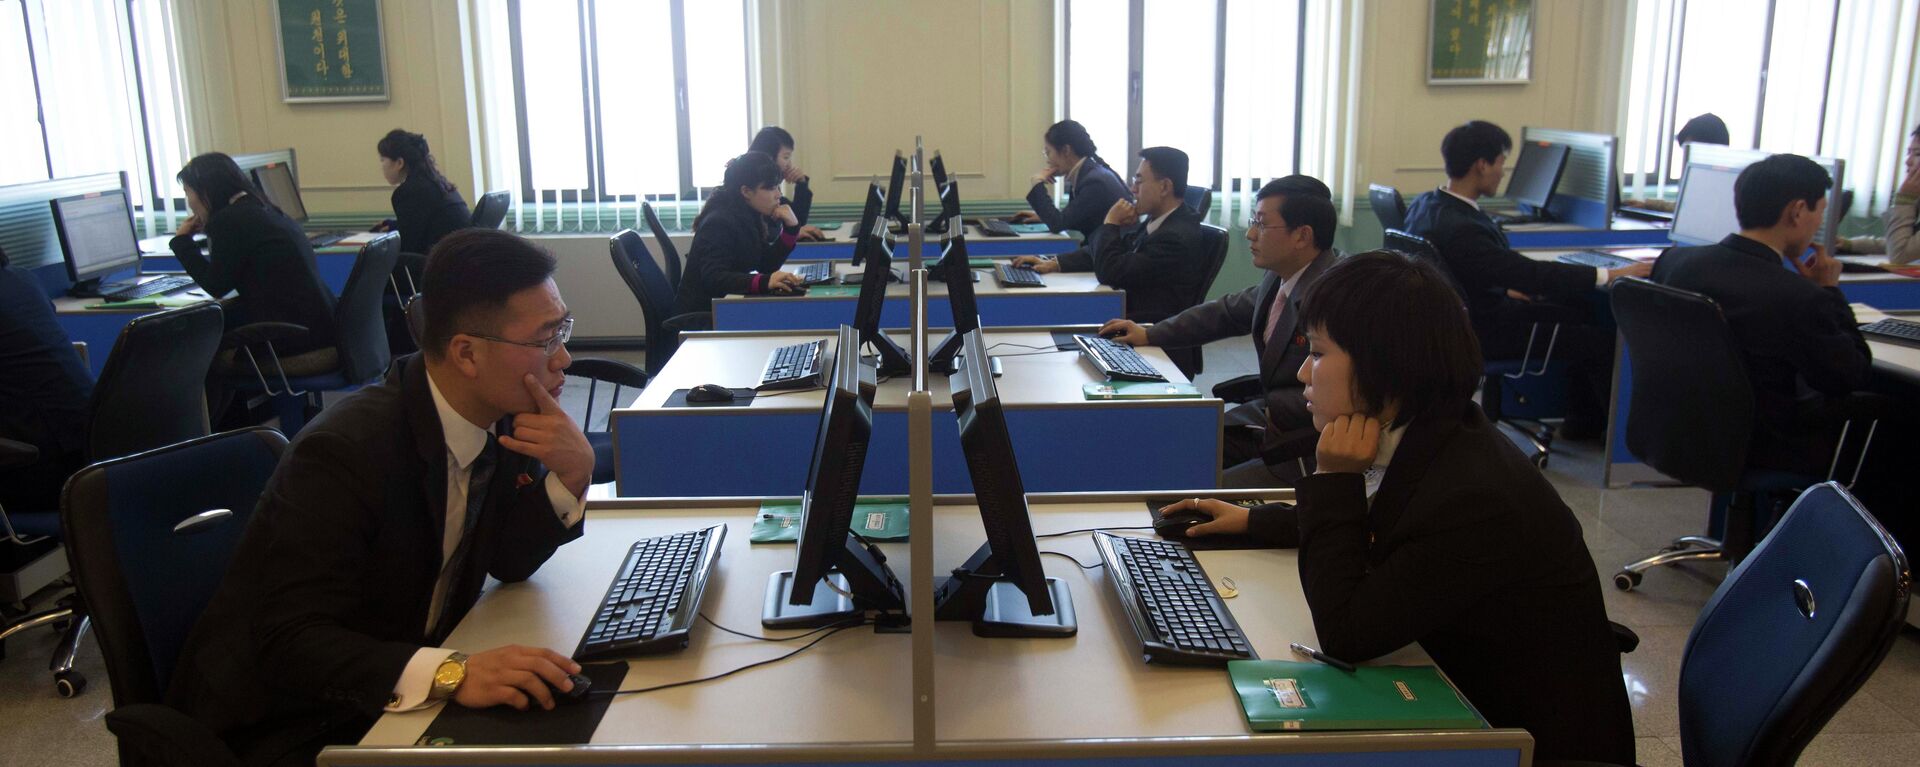 North Korean students work at computer terminals inside a computer lab at Kim Il-sung University. - Sputnik International, 1920, 27.11.2020